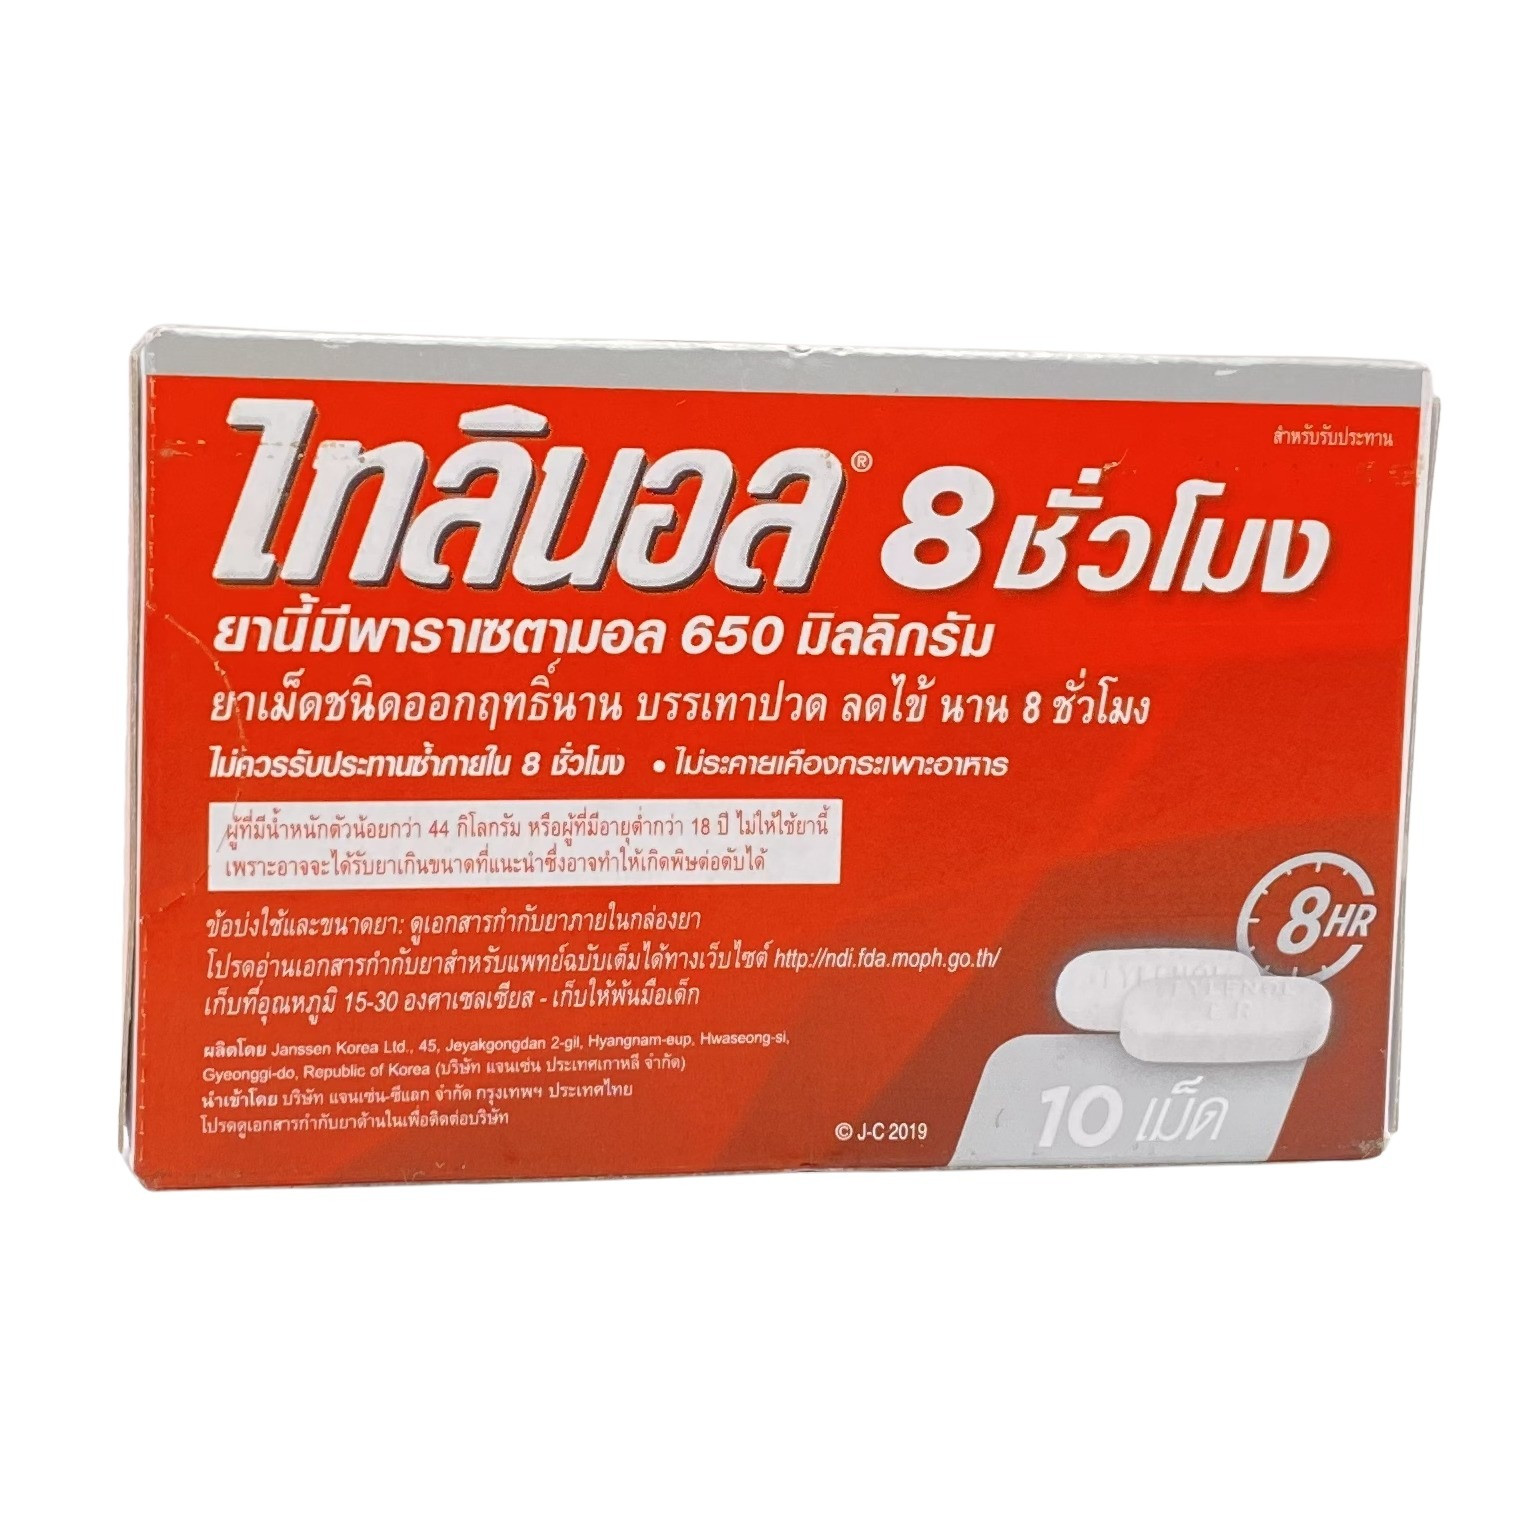 Tylenol 8 Hour (Paracetamol Er Tablet 650 Mg) ยาแก้ปวดลดไข้ชนิดออกฤทธิ์นาน  8 ชั่วโมง ไทลินอล ขนาดบรรจุ 10 เม็ด/แผง - สั่งยาออนไลน์